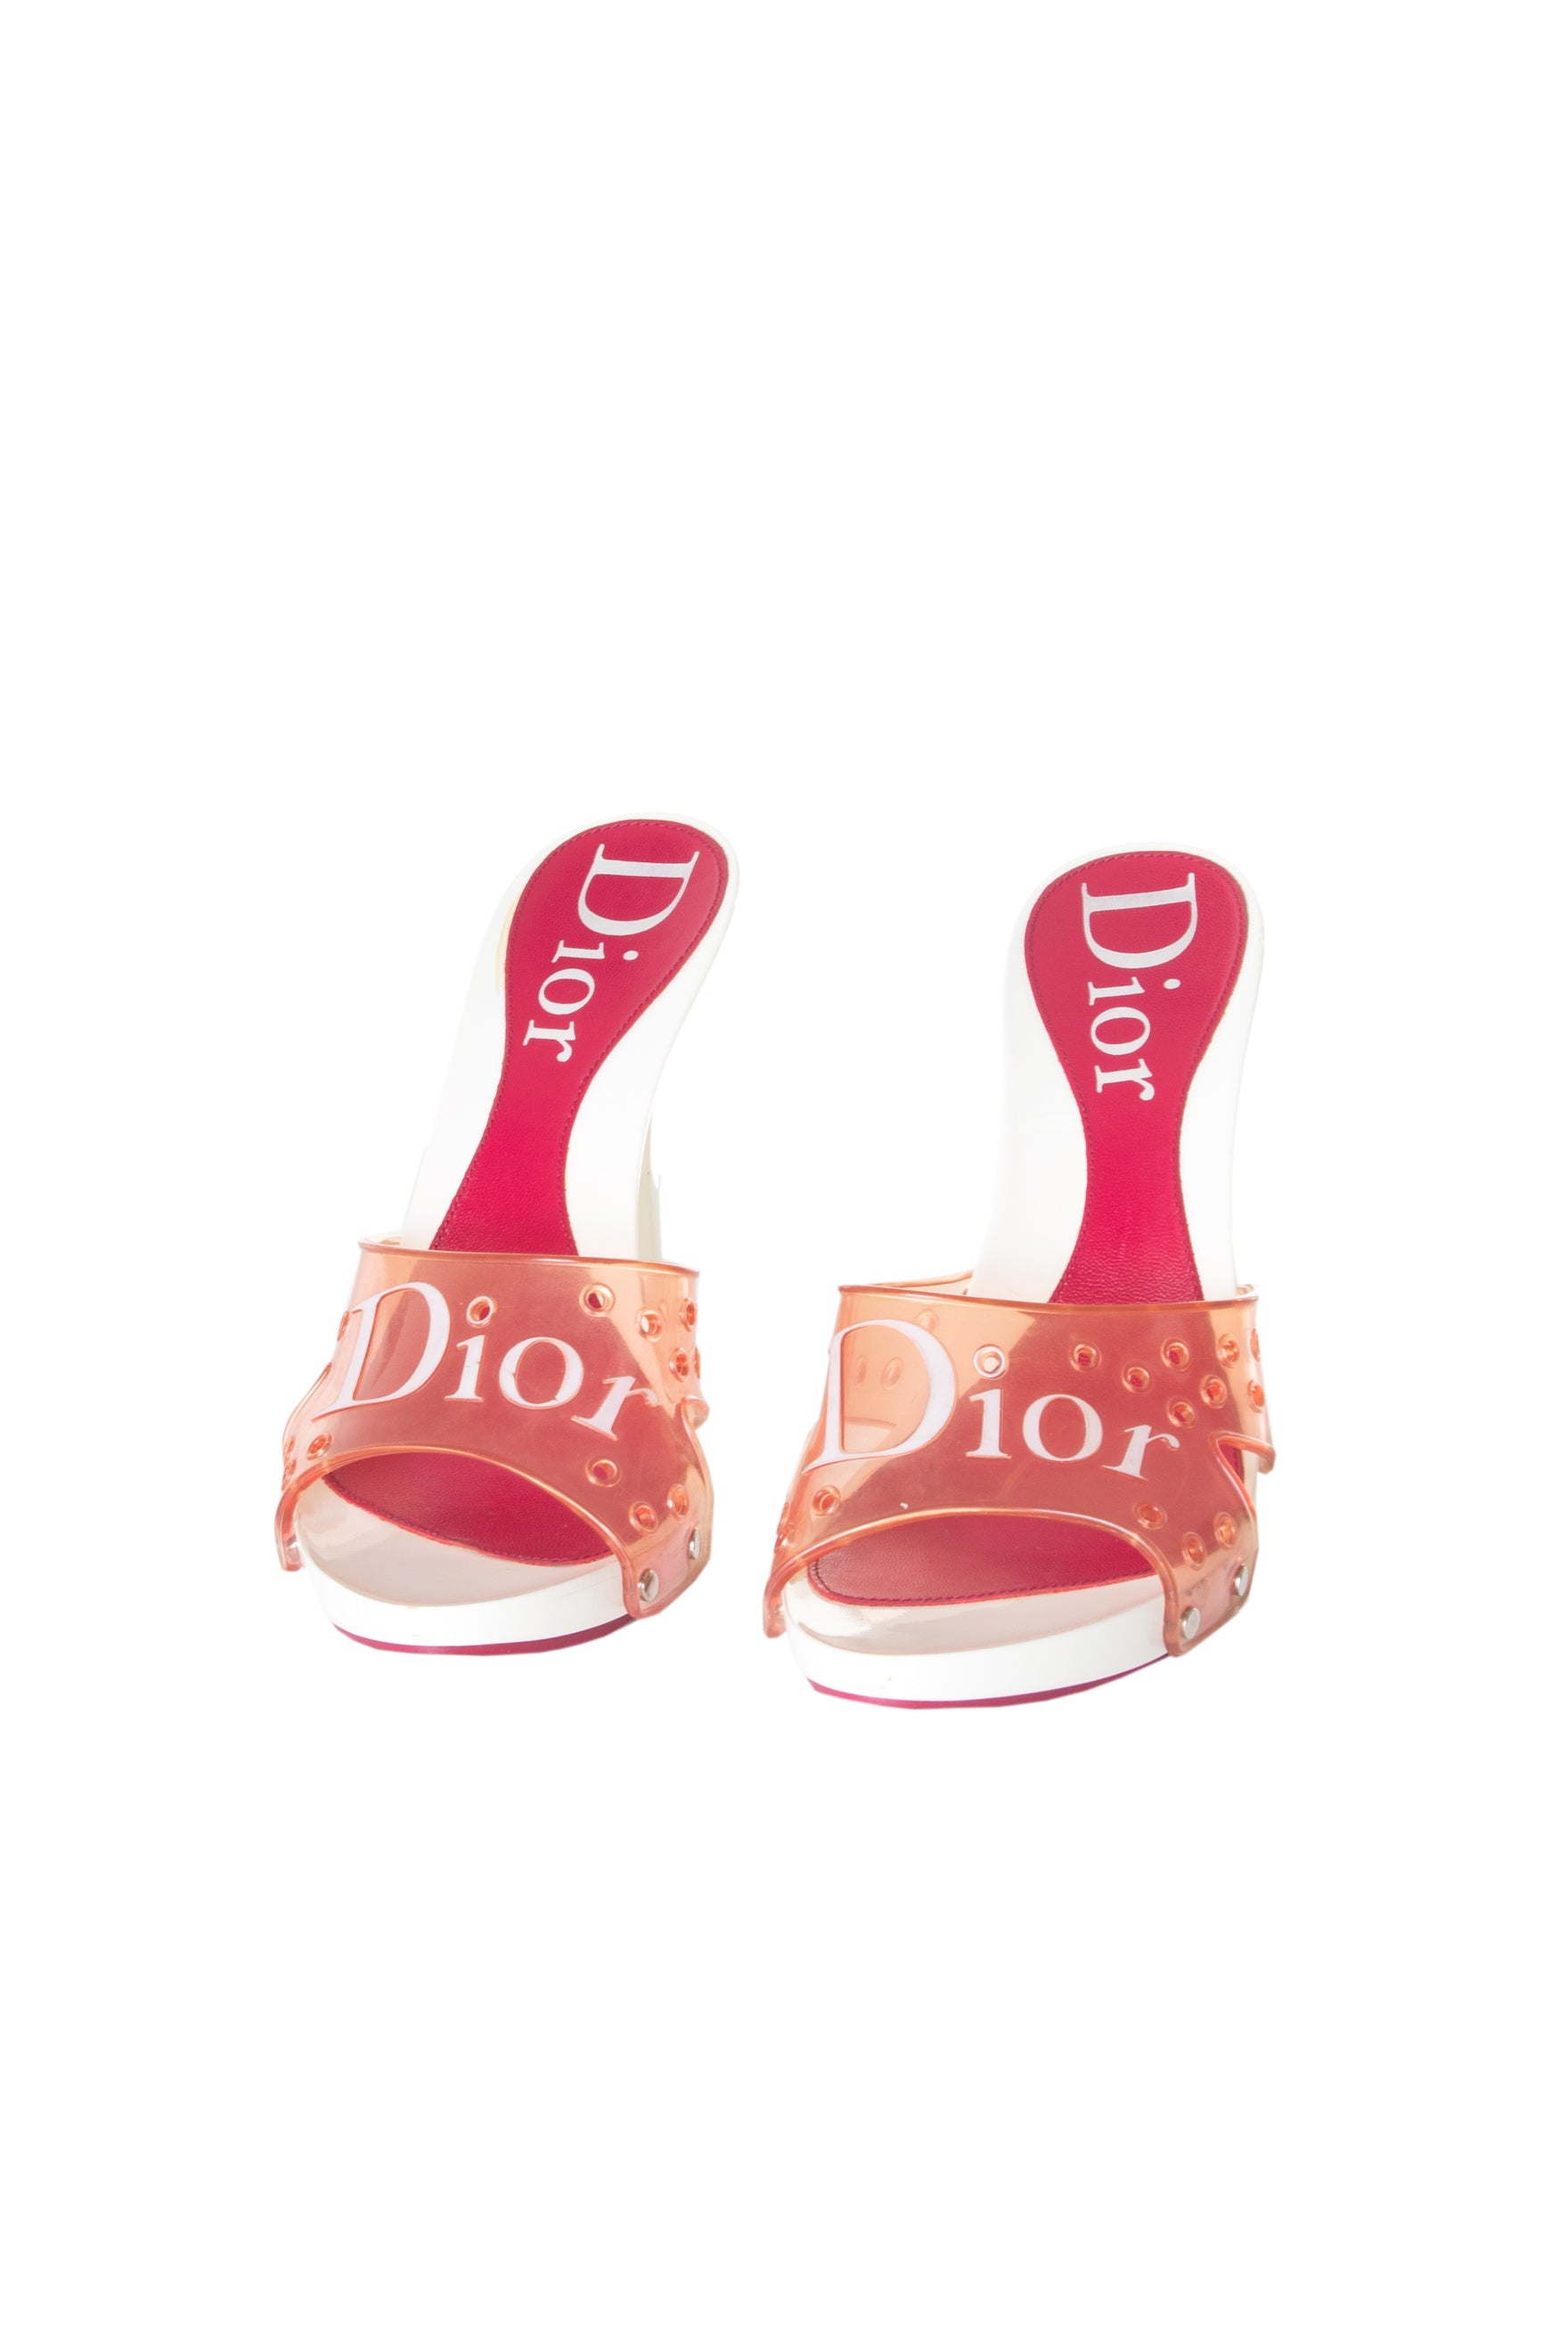 Vintage Christian Dior Pink Jelly Heels 